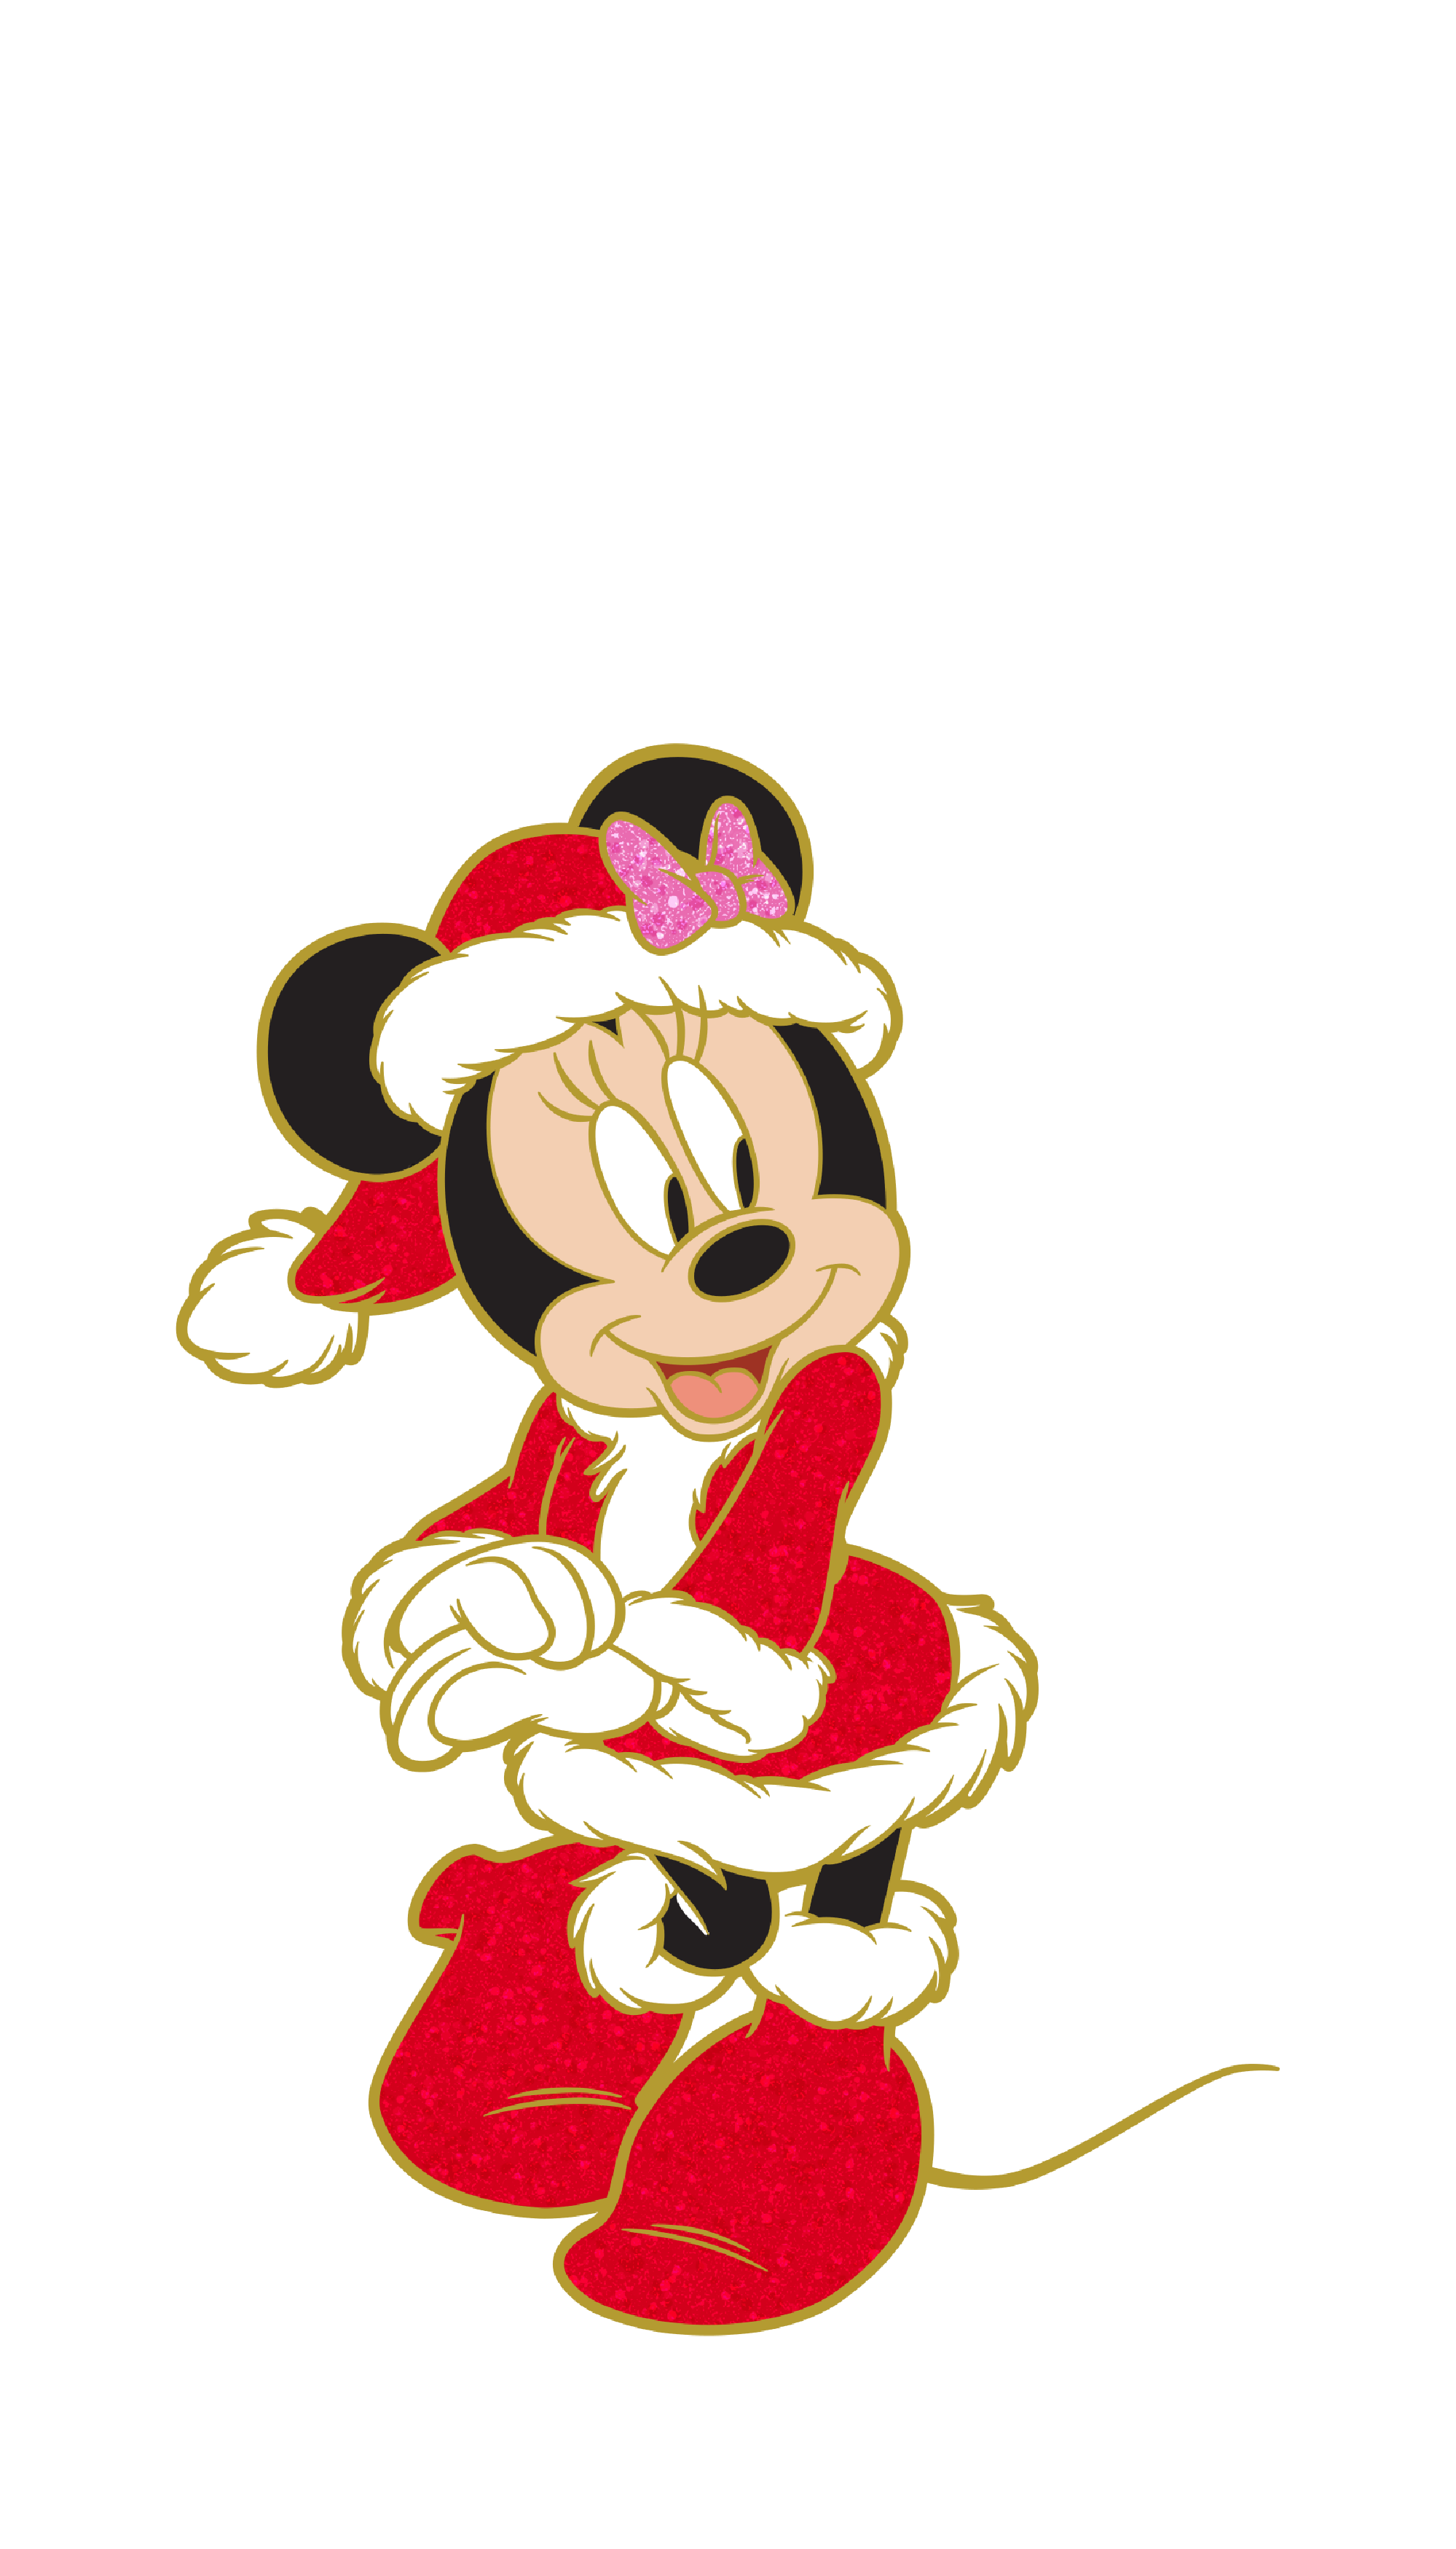 Art Render of Disney's Minnie Mouse enamel pin.